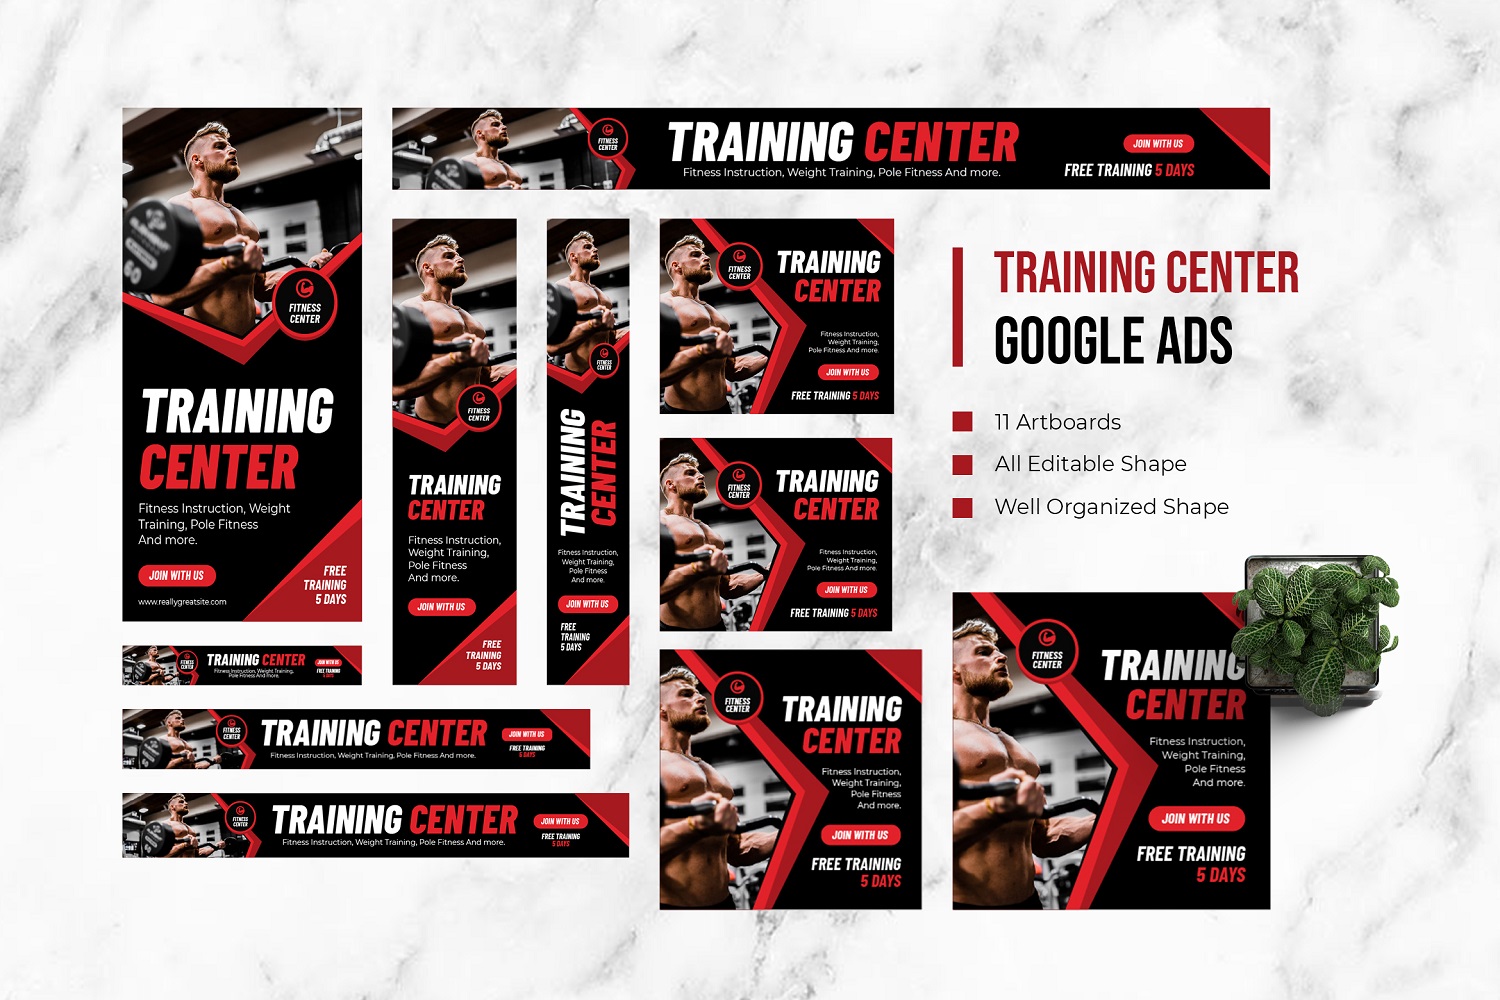 Training Center Google Ads